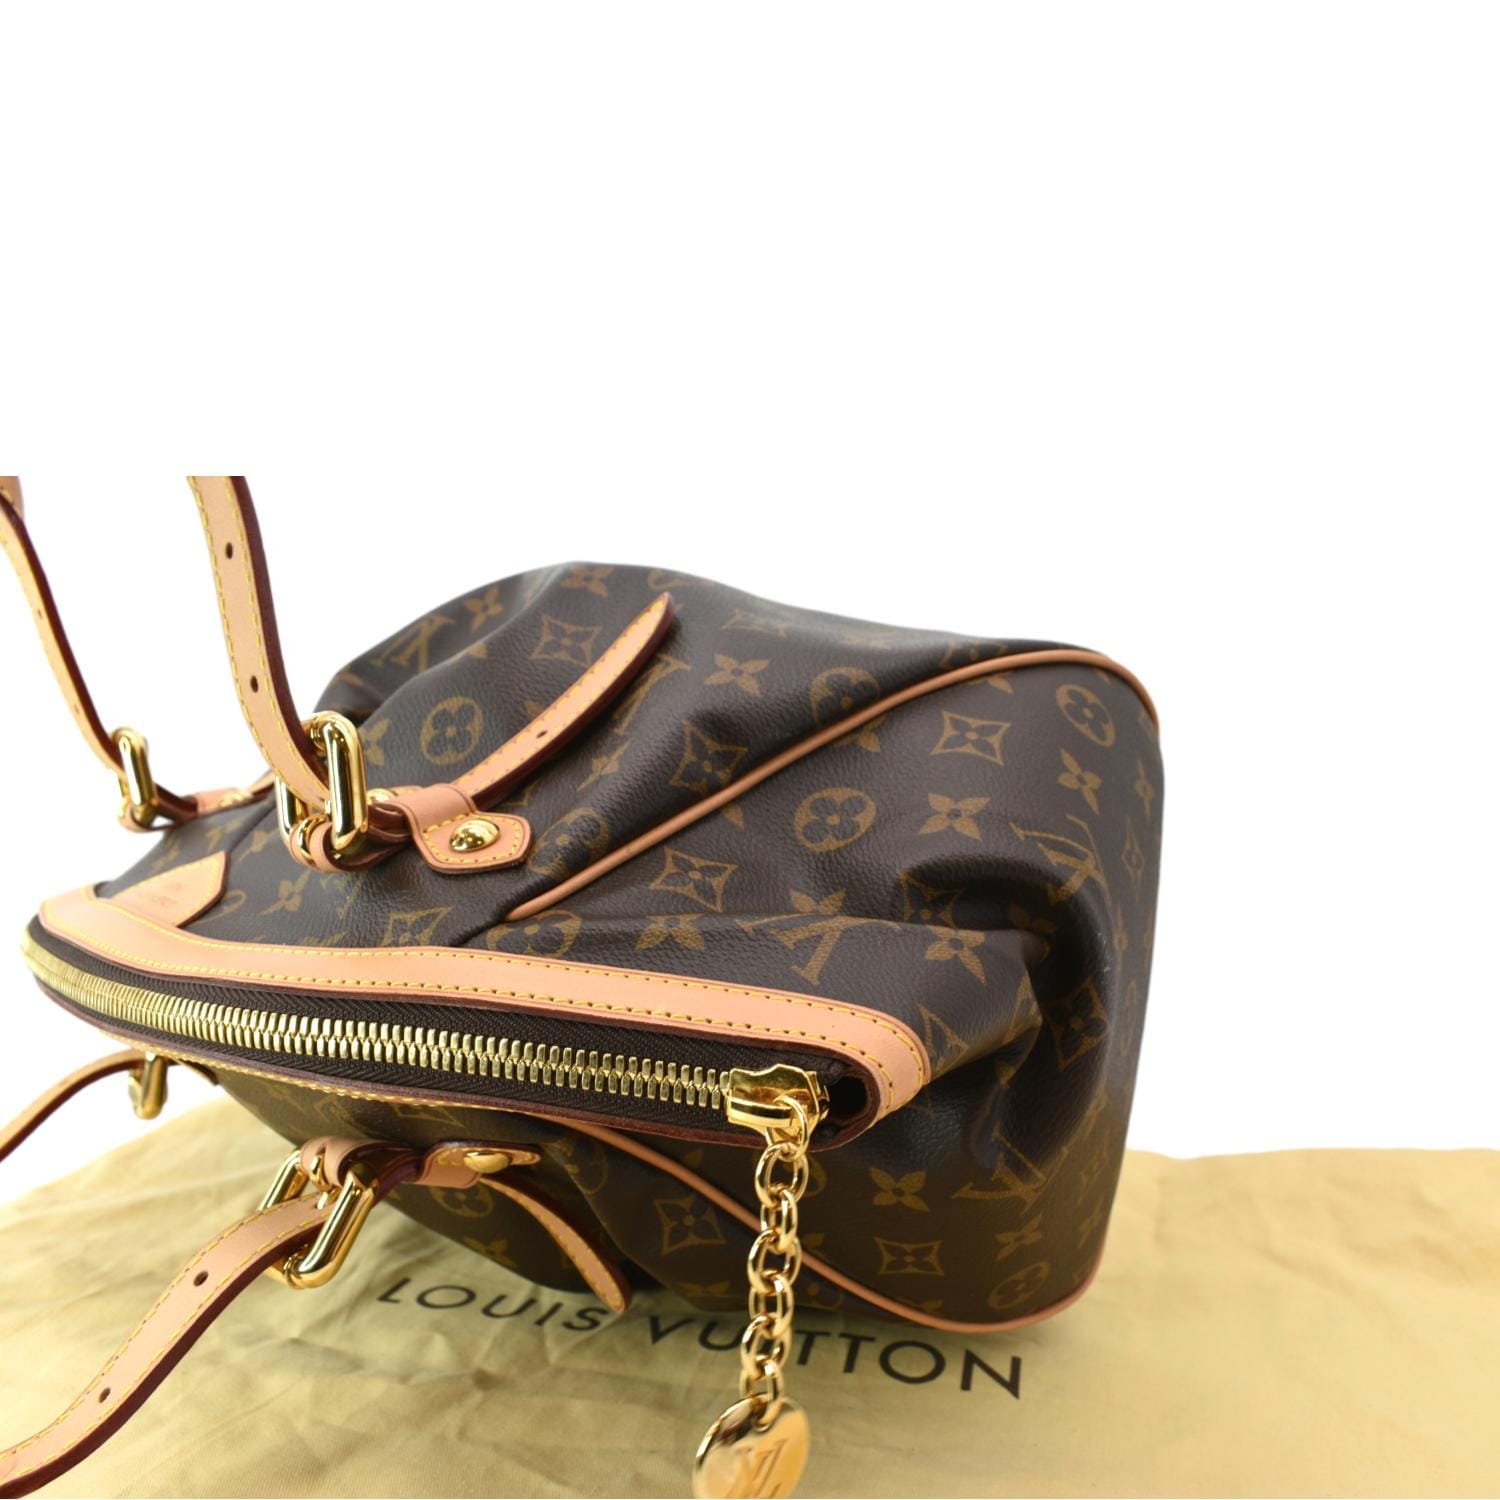 Louis Vuitton alert! 😍🙌 scoop up this gorgeous LV Tivoli GM bag